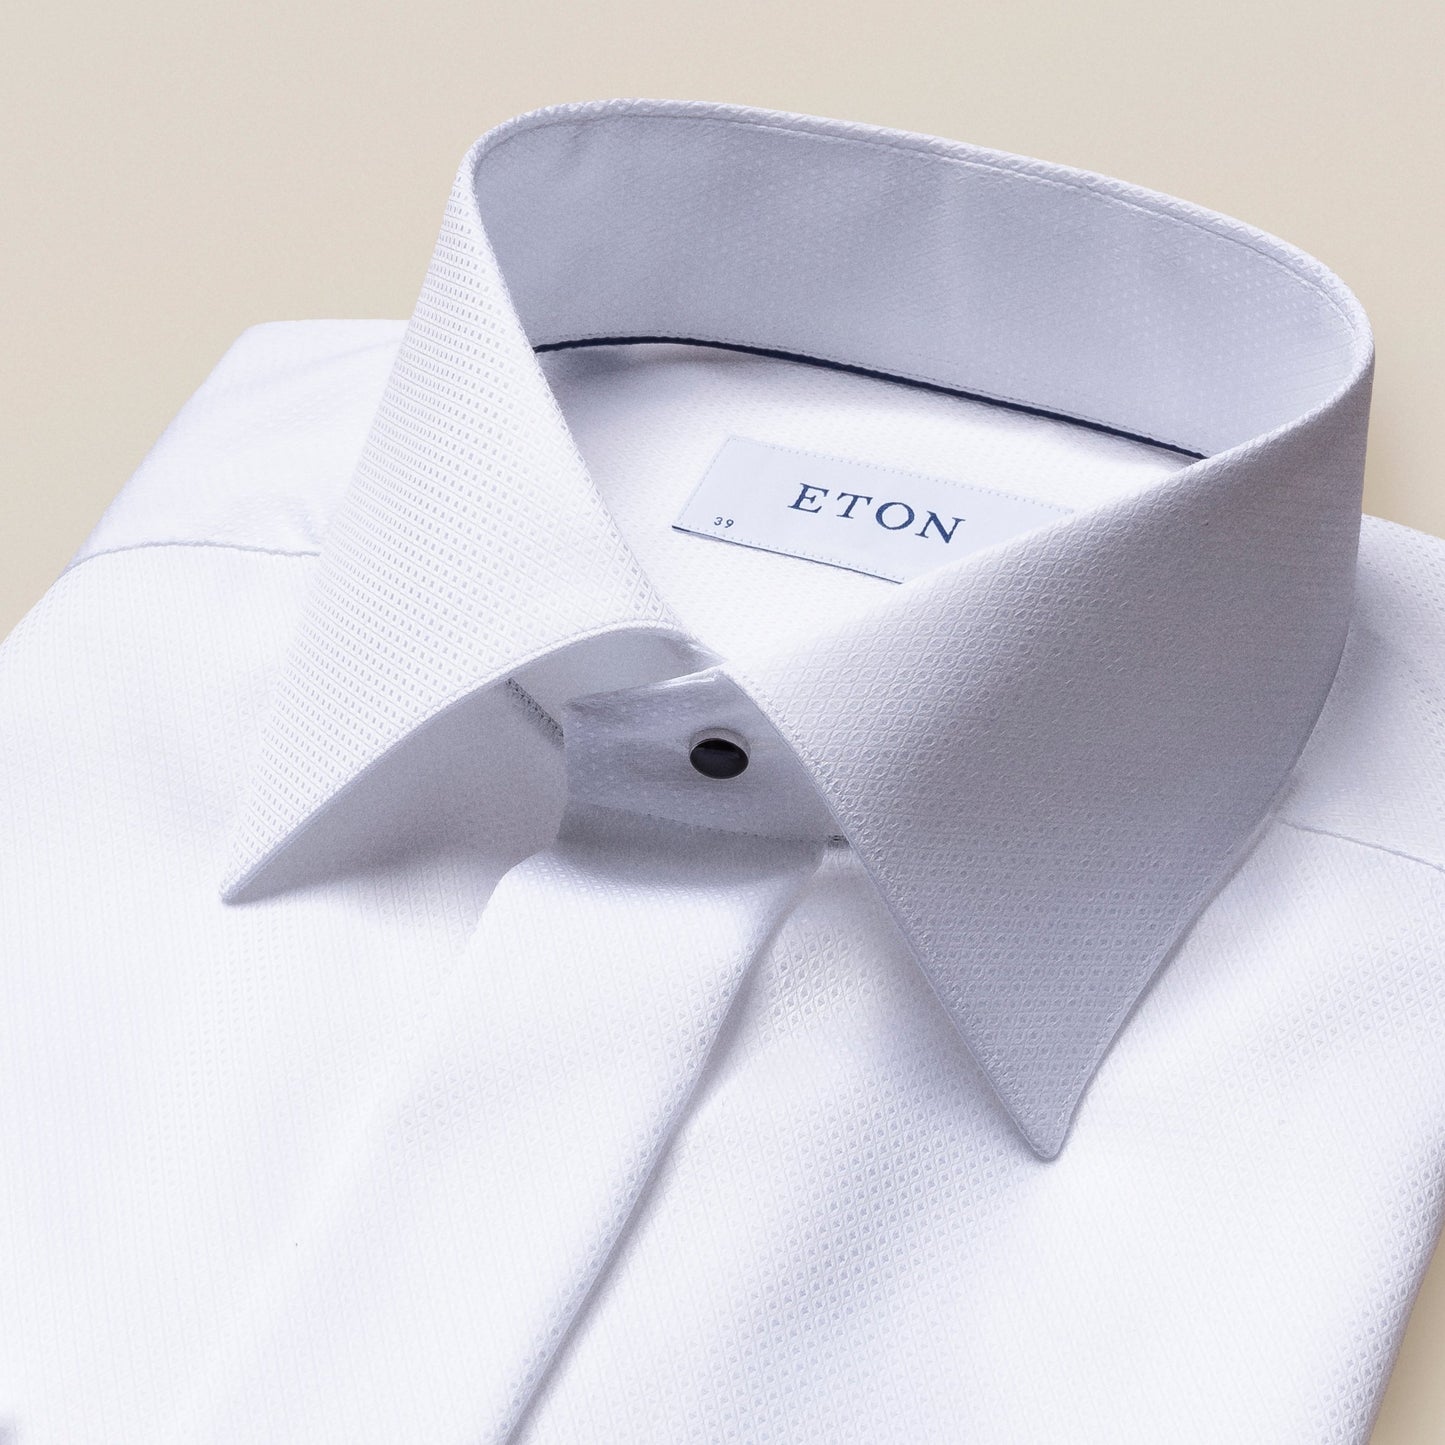 Eton L/S Dinner Shirt - Contemporary Fit